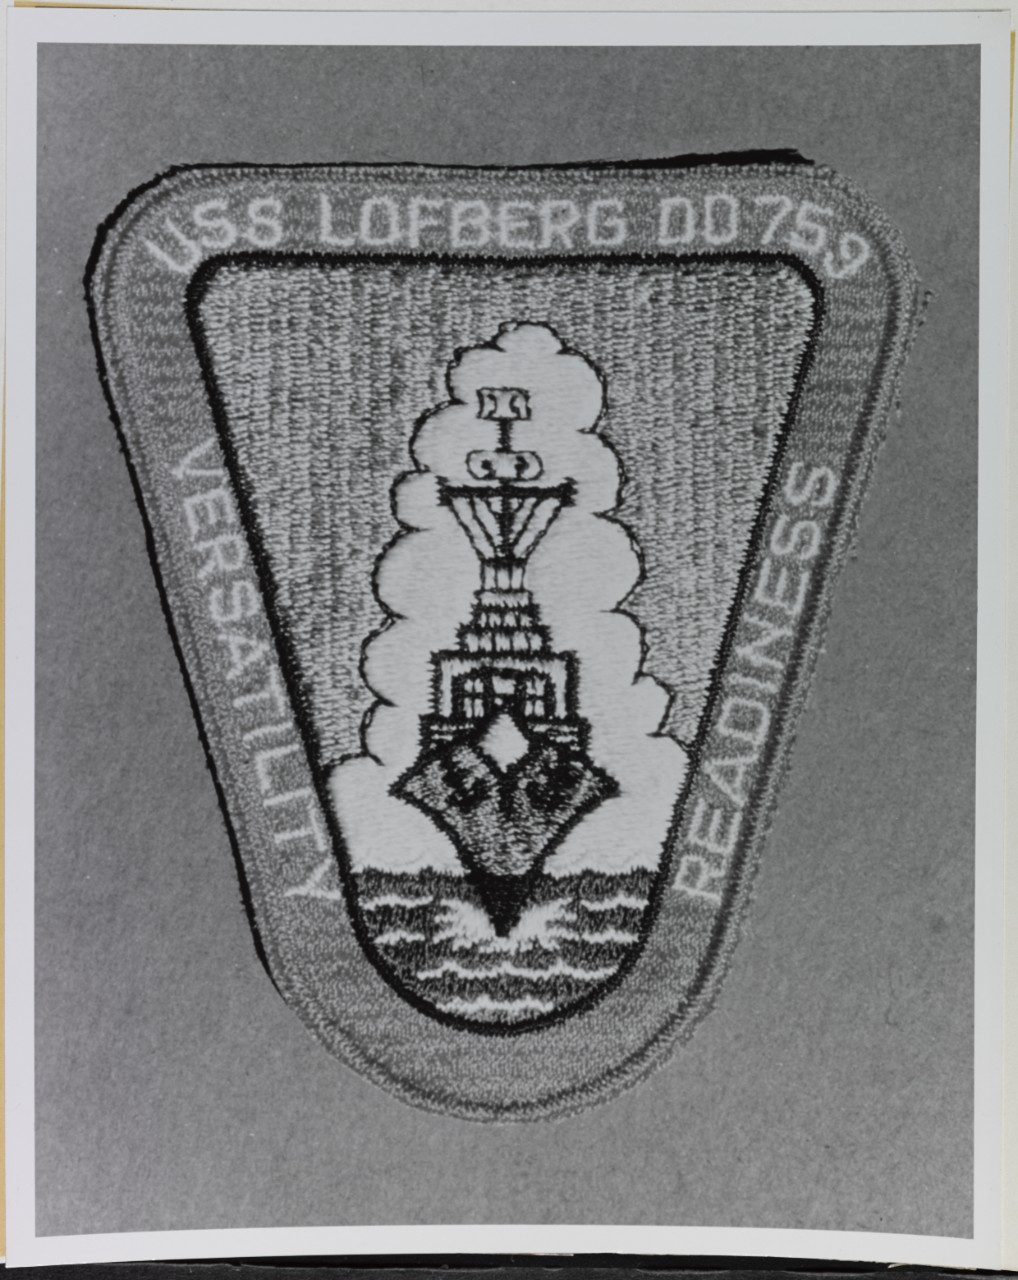 Insignia:  USS LOFBERG (DD-759)